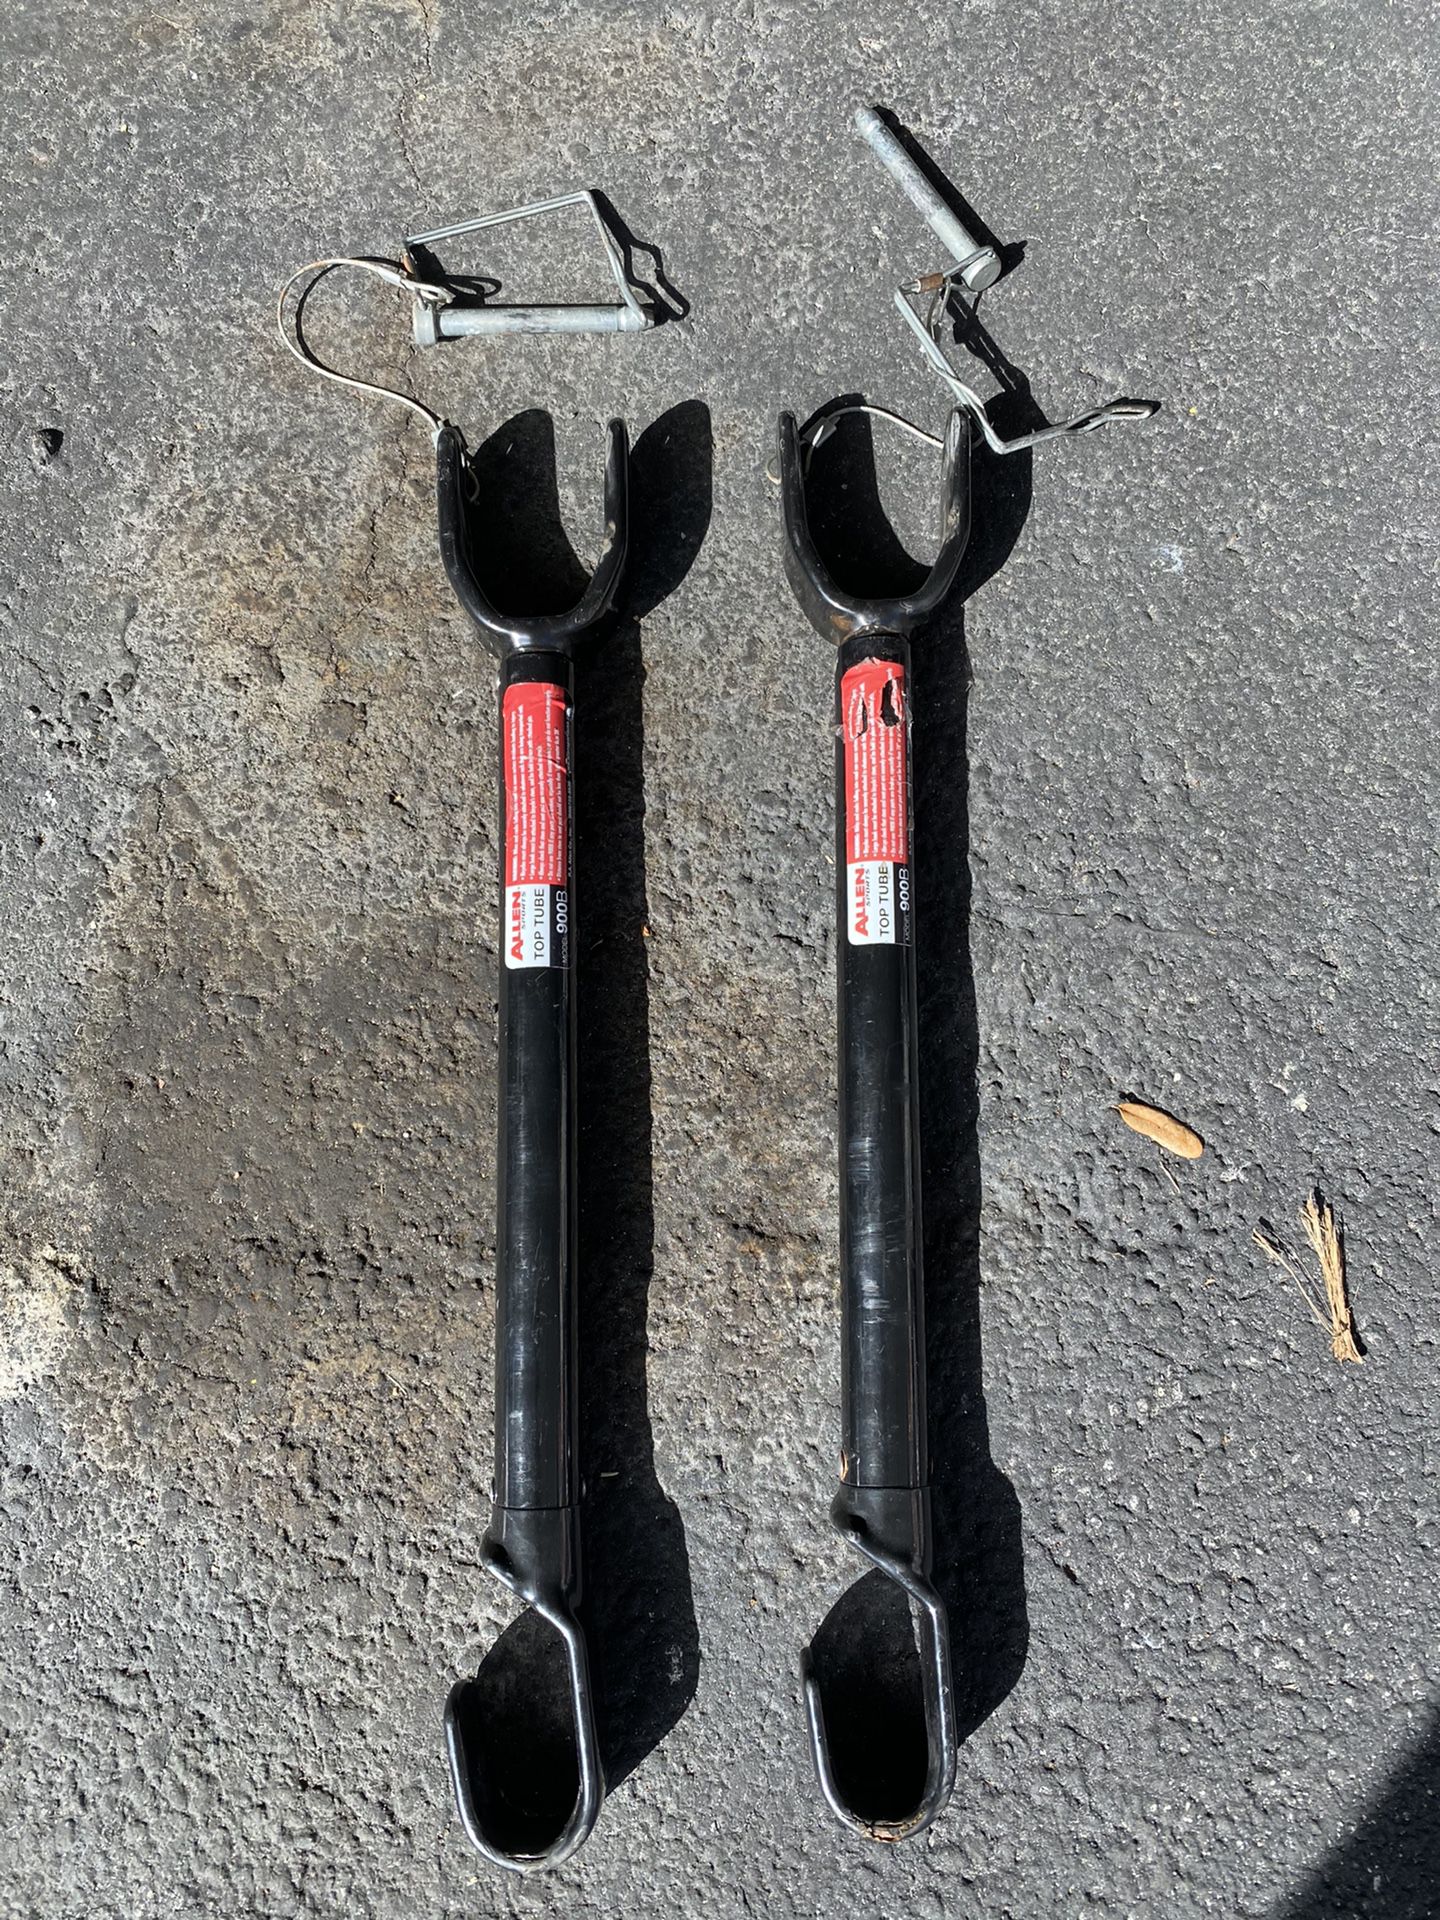 Pair of bike top tube adapters